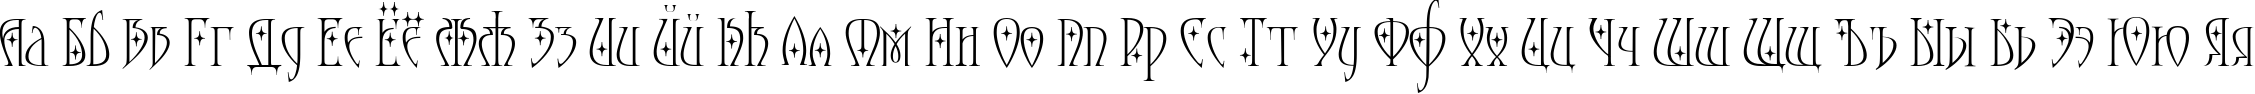 Пример написания русского алфавита шрифтом Moonstone Stars